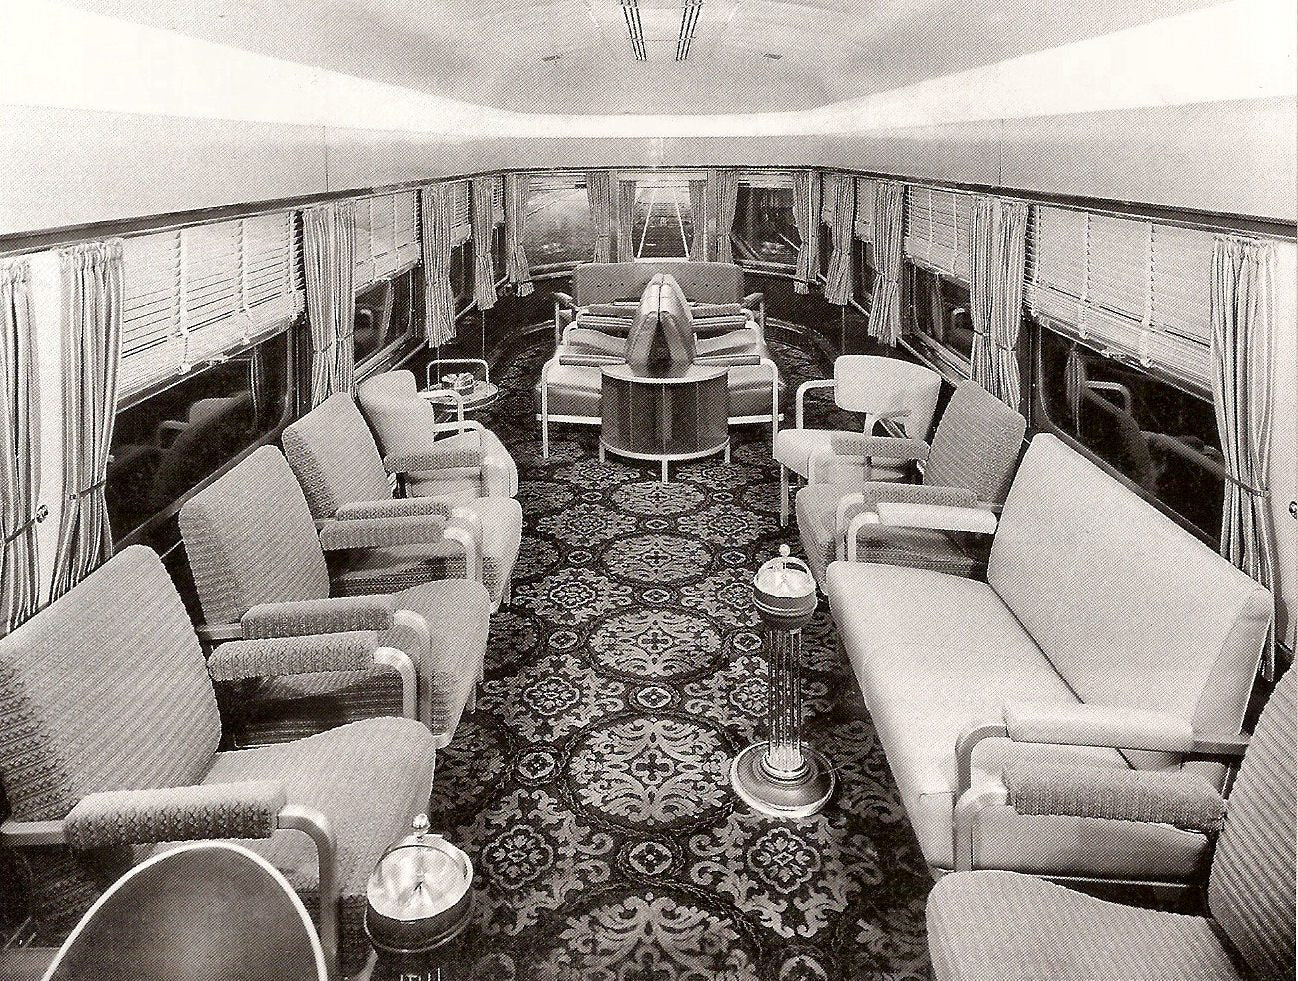 Luxury Rail Cars of The Cincinnatian Steam Train were air conditioned